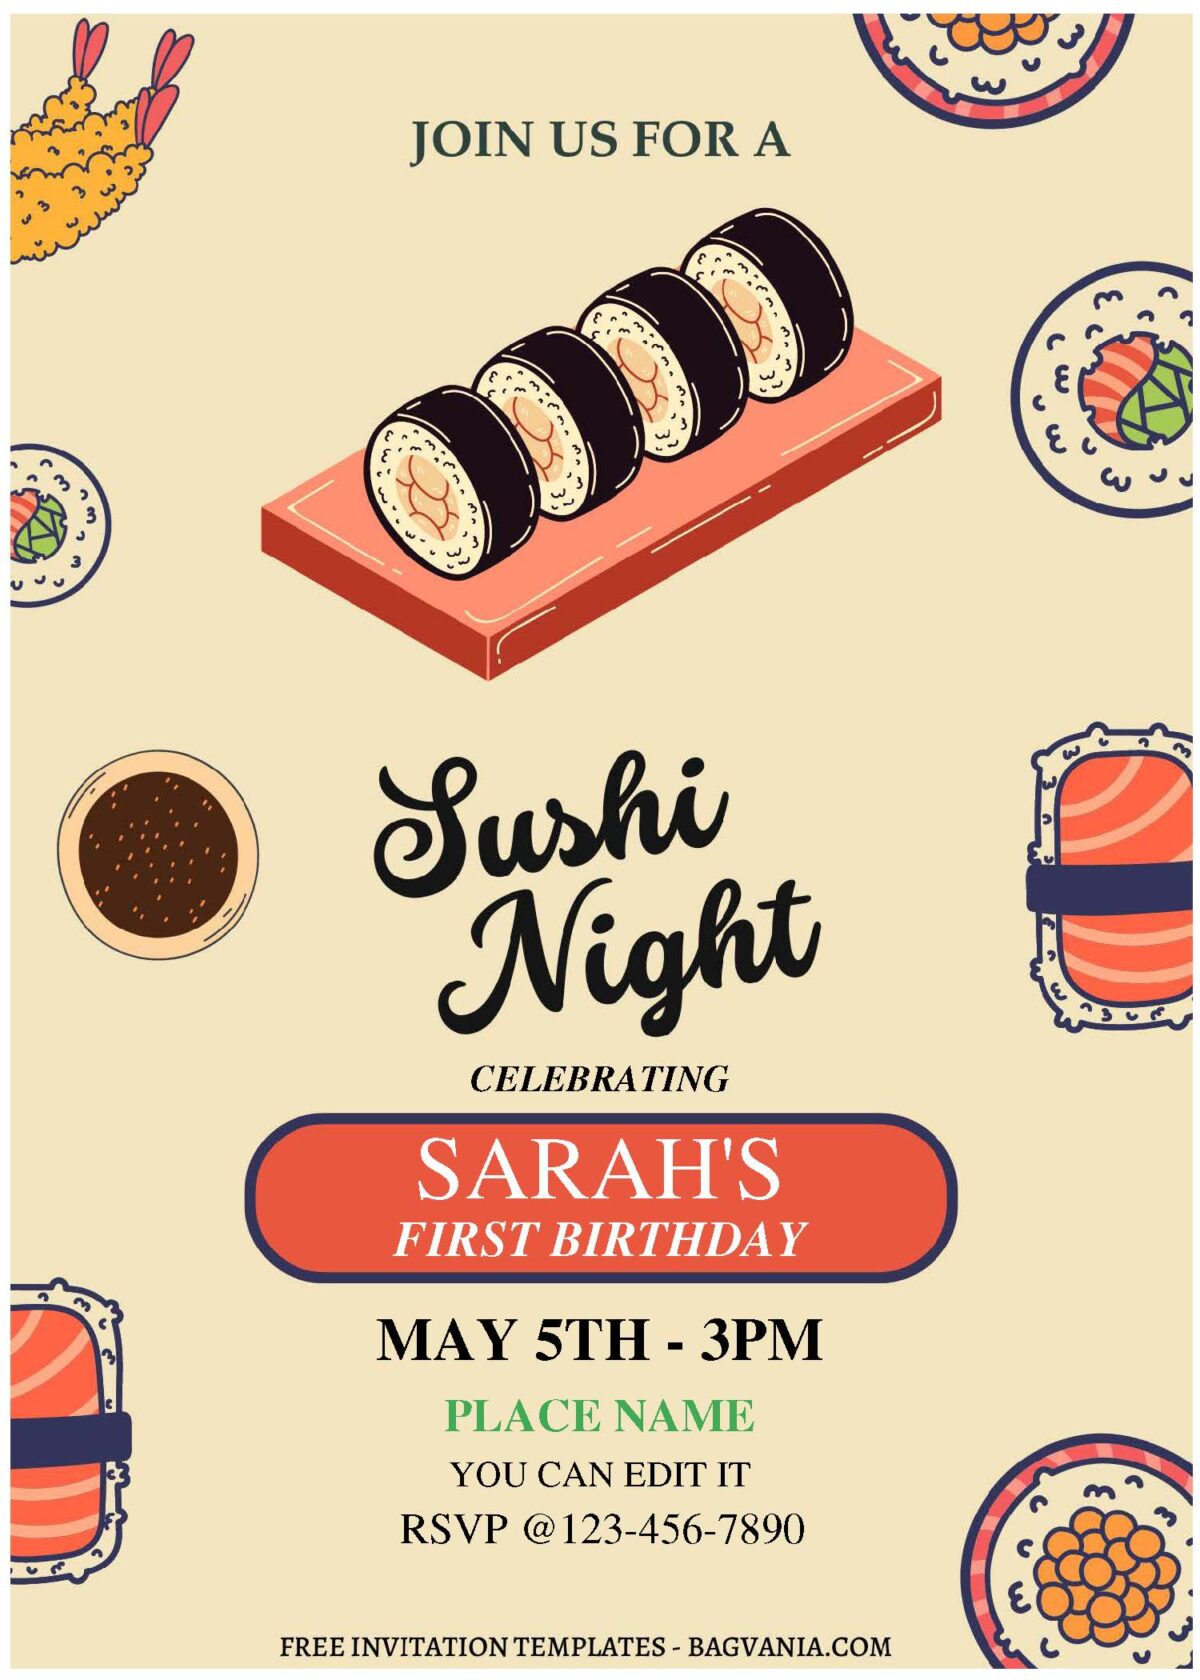 (Free Editable PDF) Roll Out The Fun Sushi Birthday Invitation Templates A